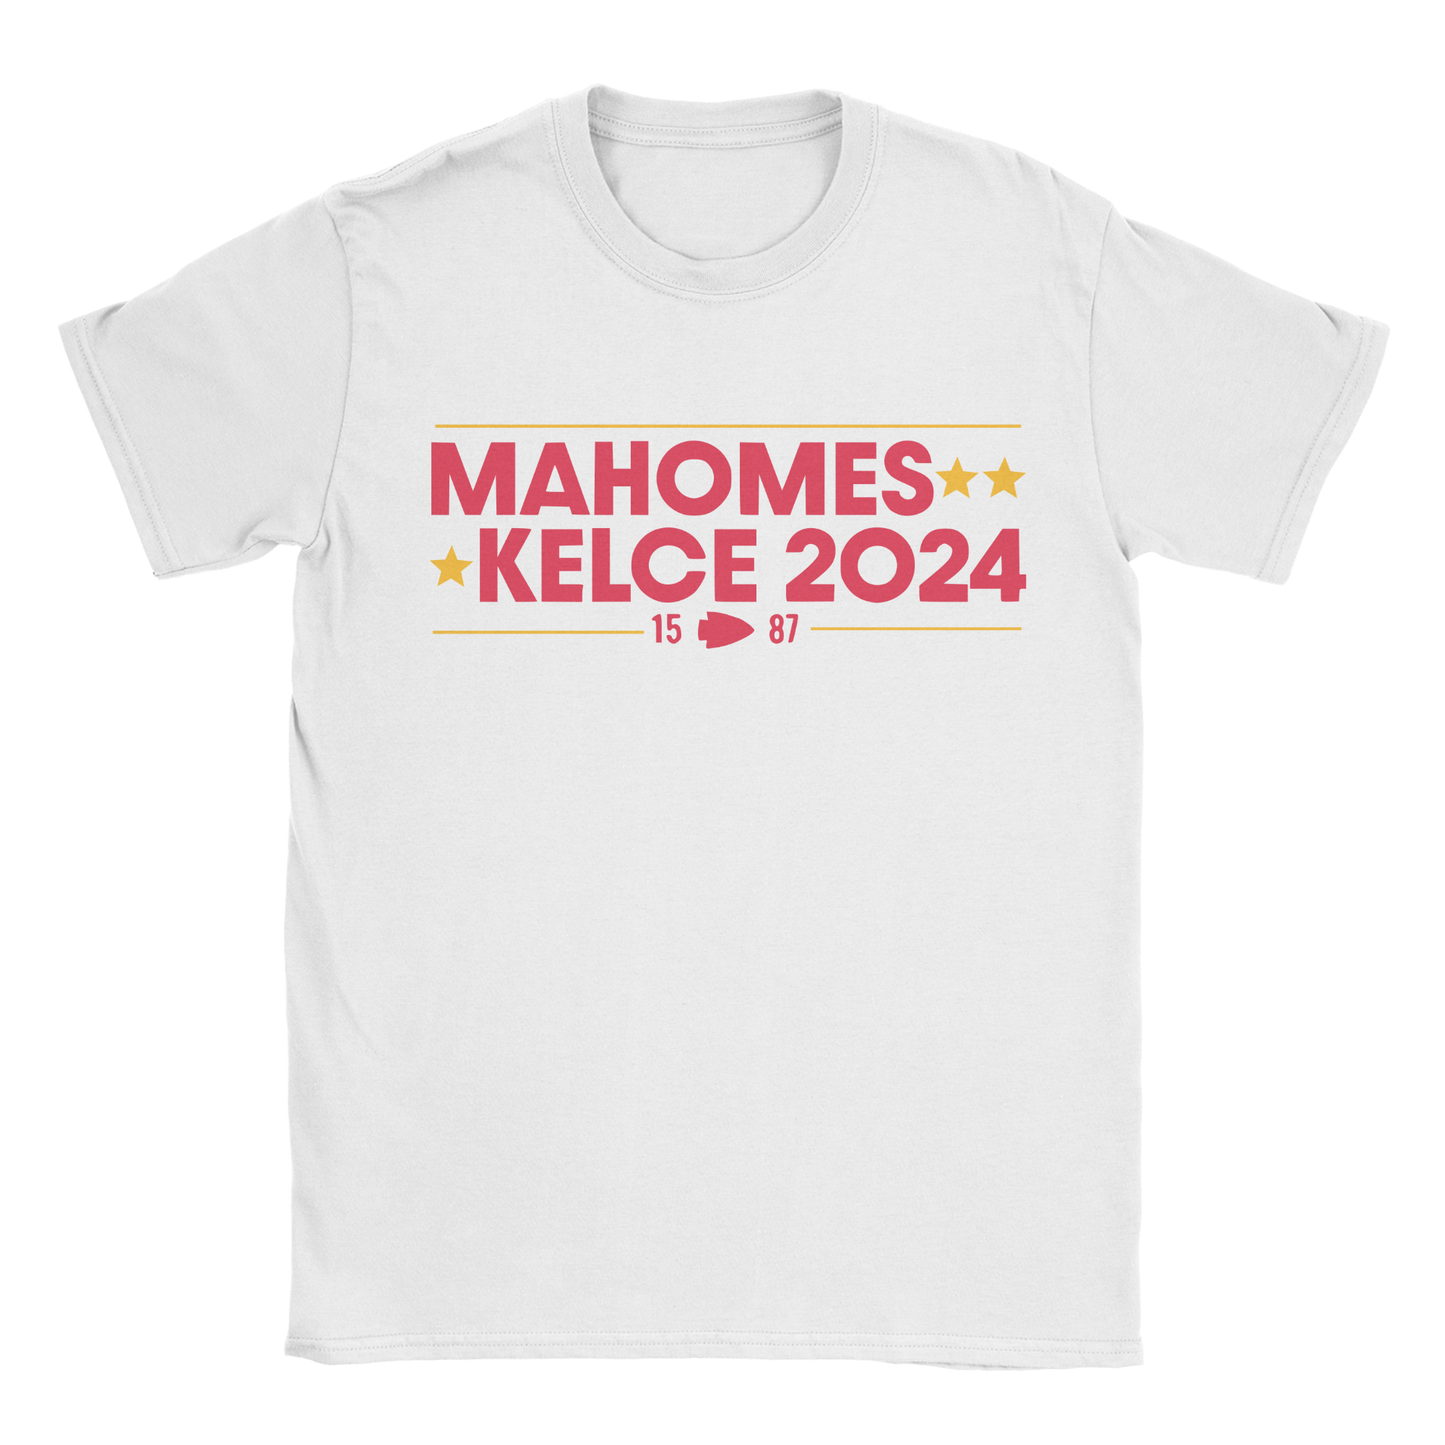 Mahomes Kelce 24 T-Shirt